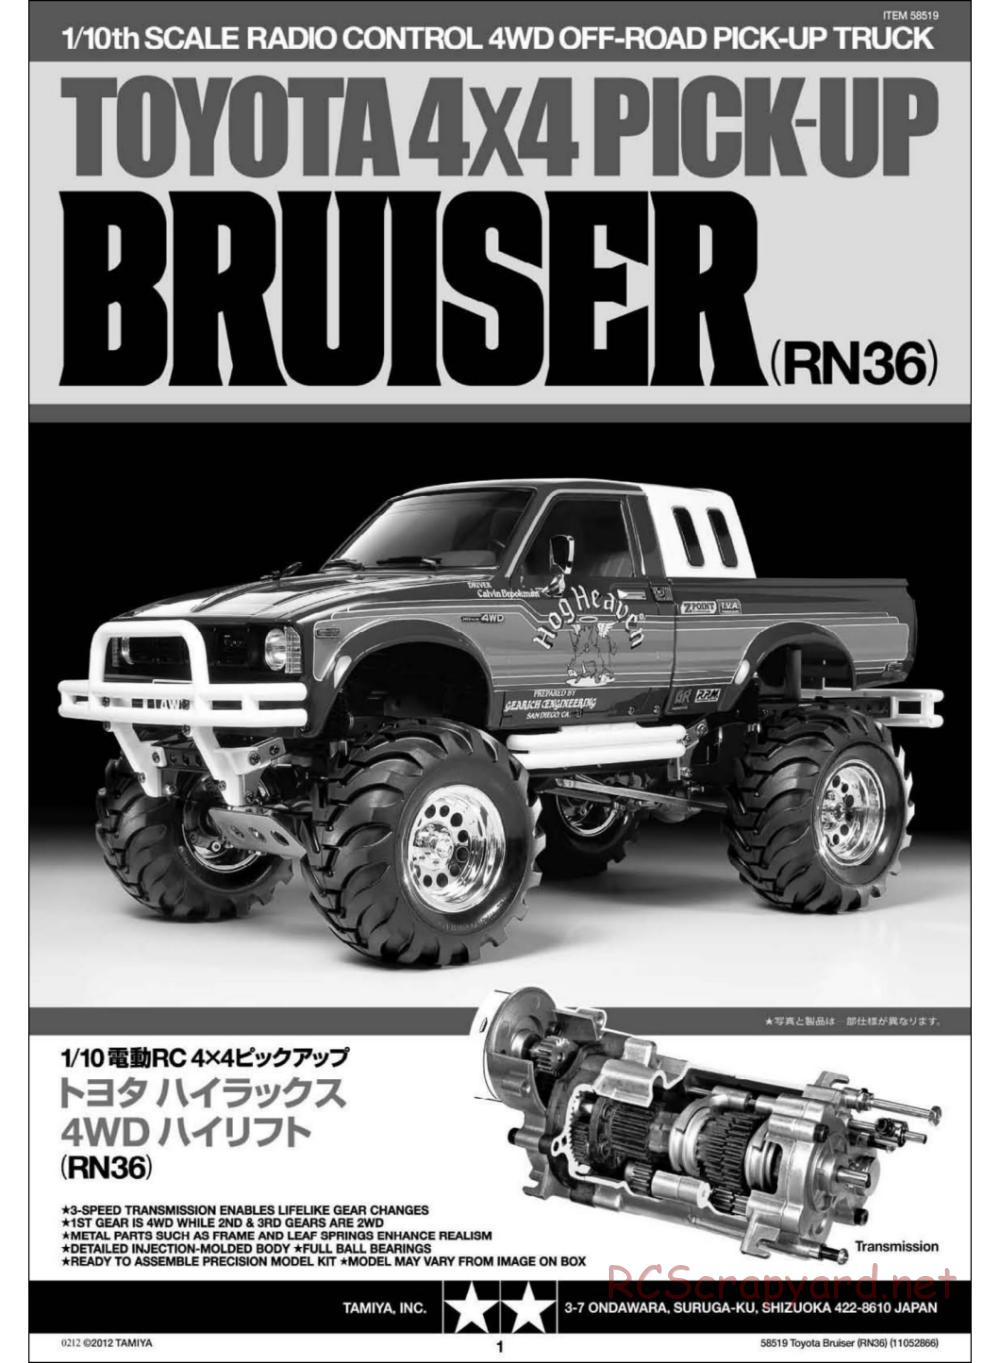 Tamiya - Toyota 4x4 Pick Up Bruiser Chassis - Manual - Page 1